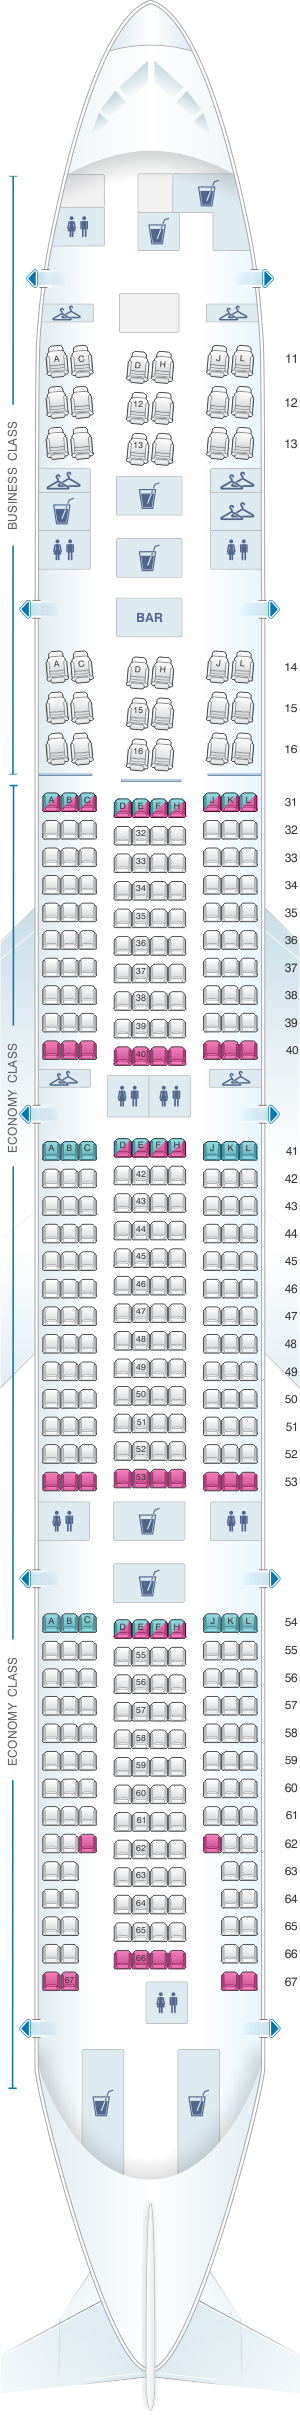 boeing 777 seating air china